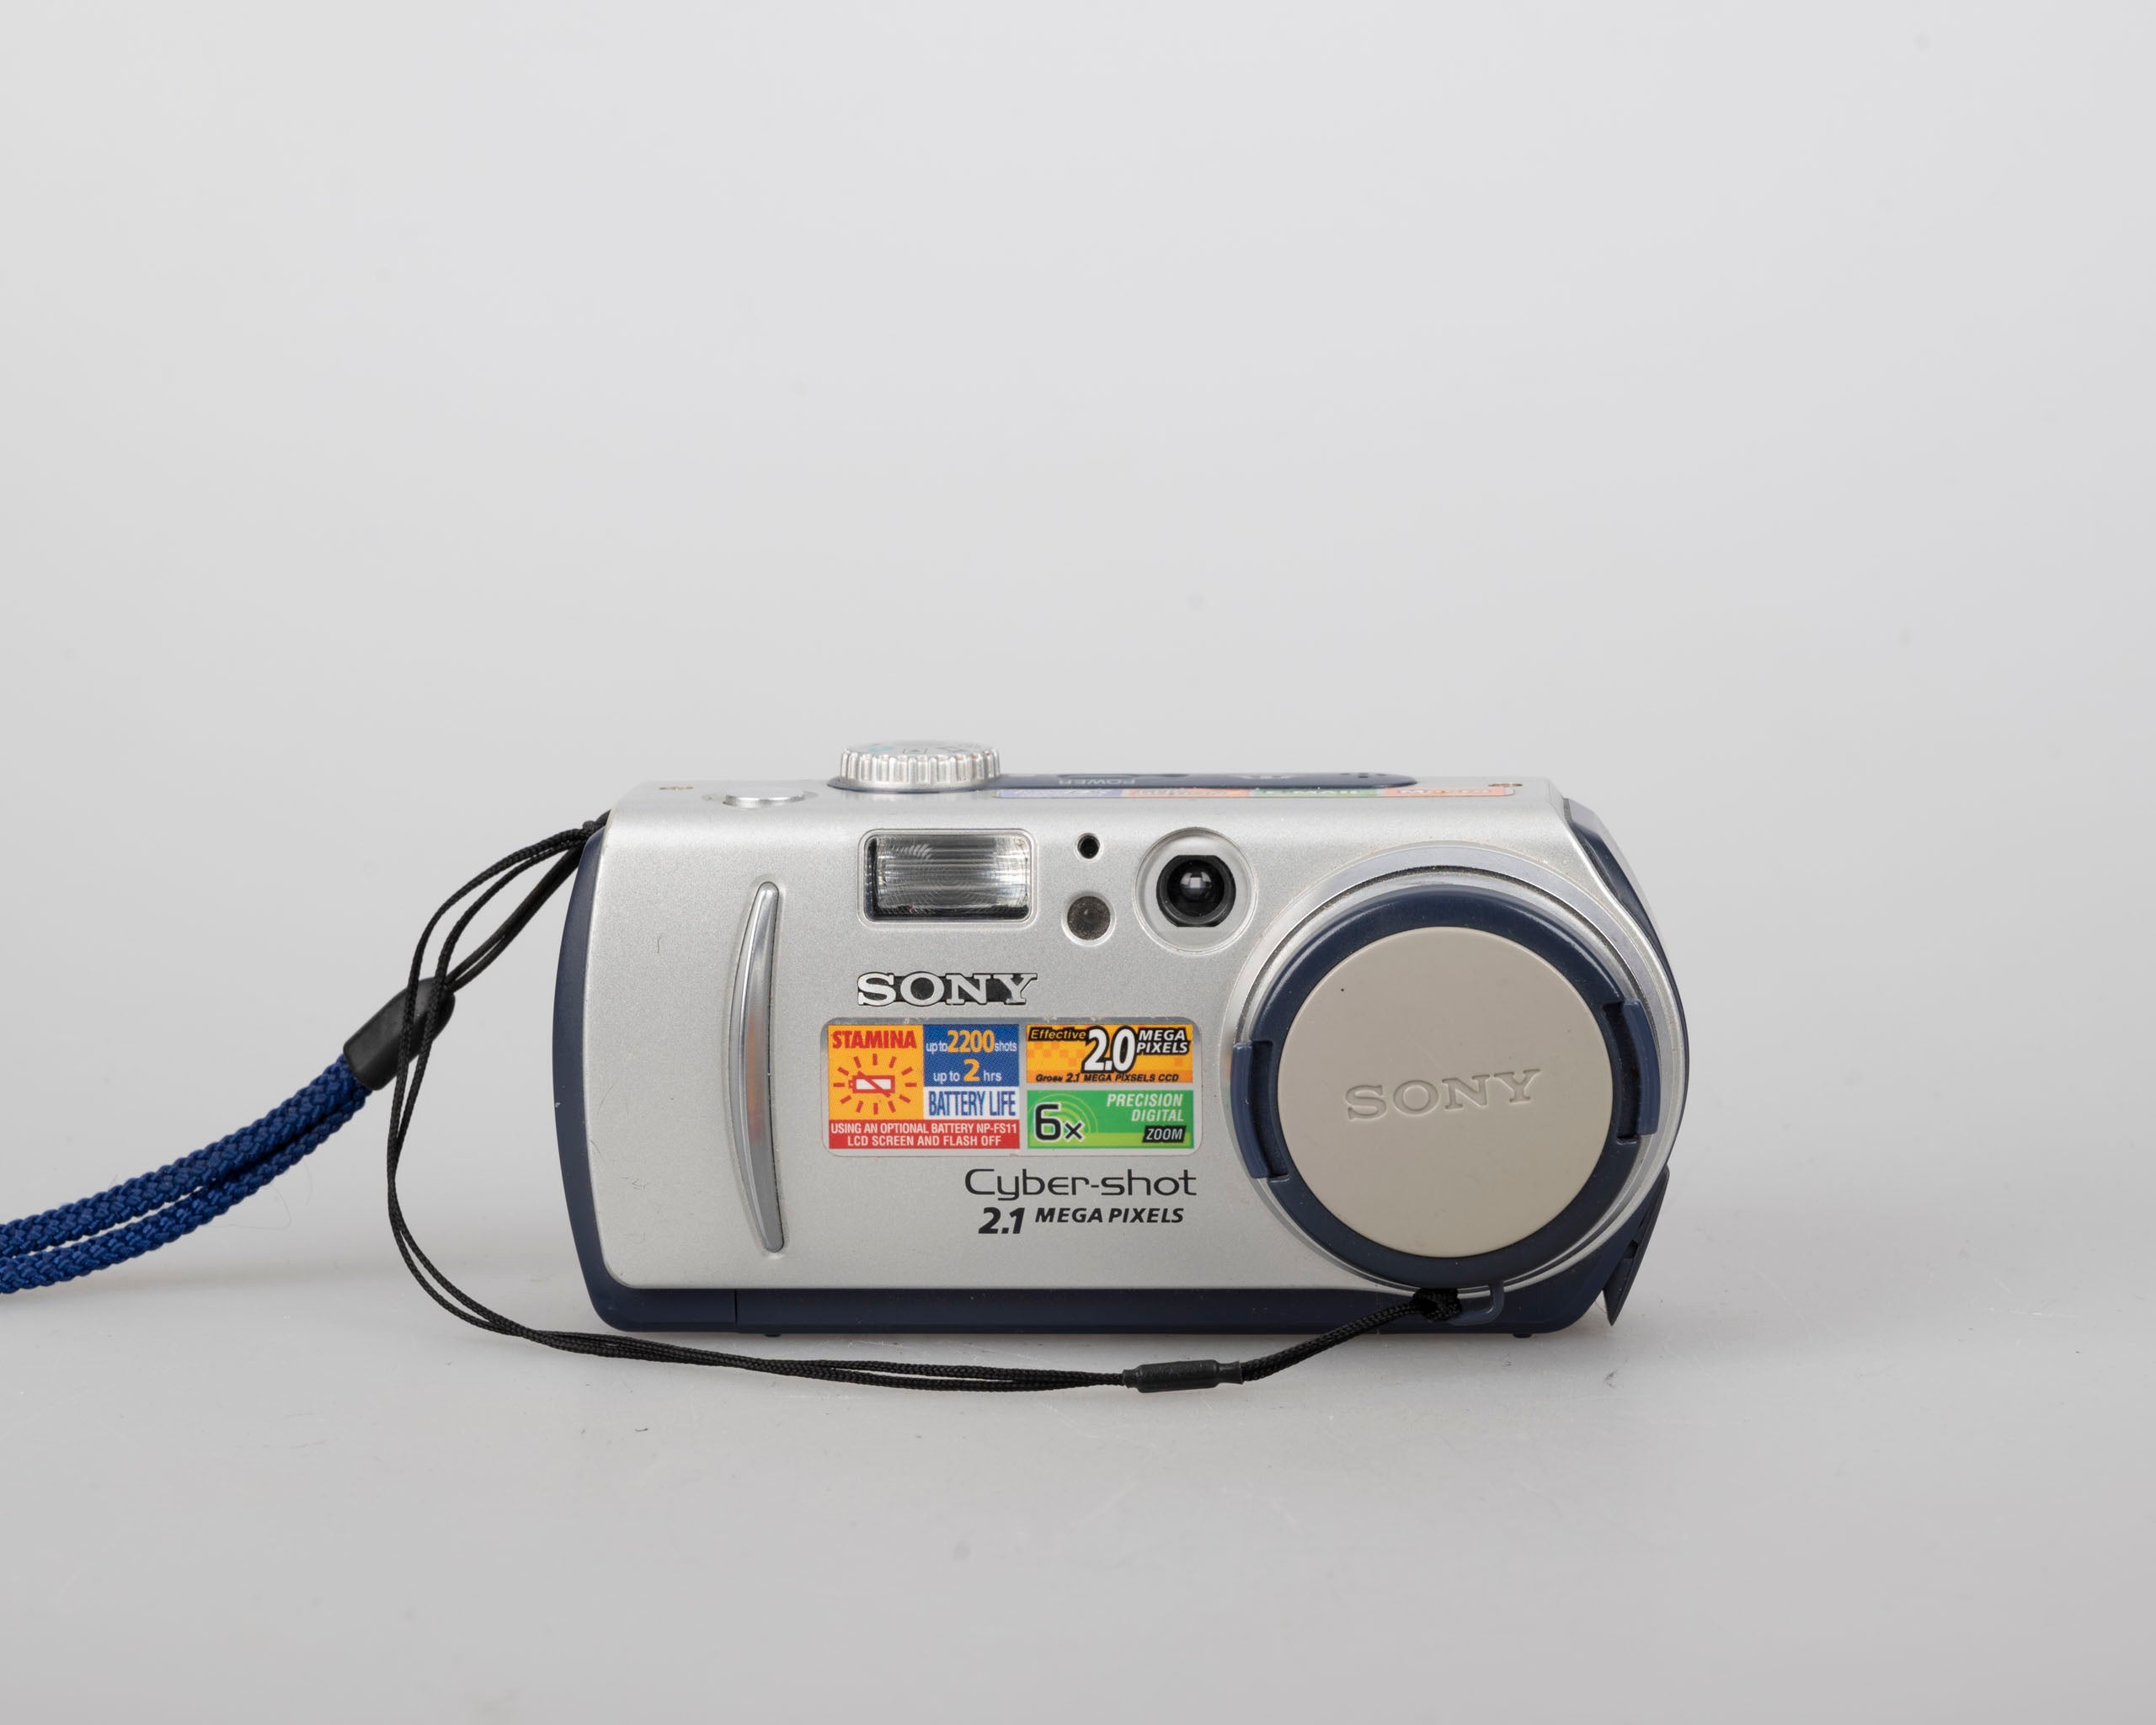 Sony Cyber-Shot DSC-P50 2.1 MP CCD sensor digicam (uses AA 